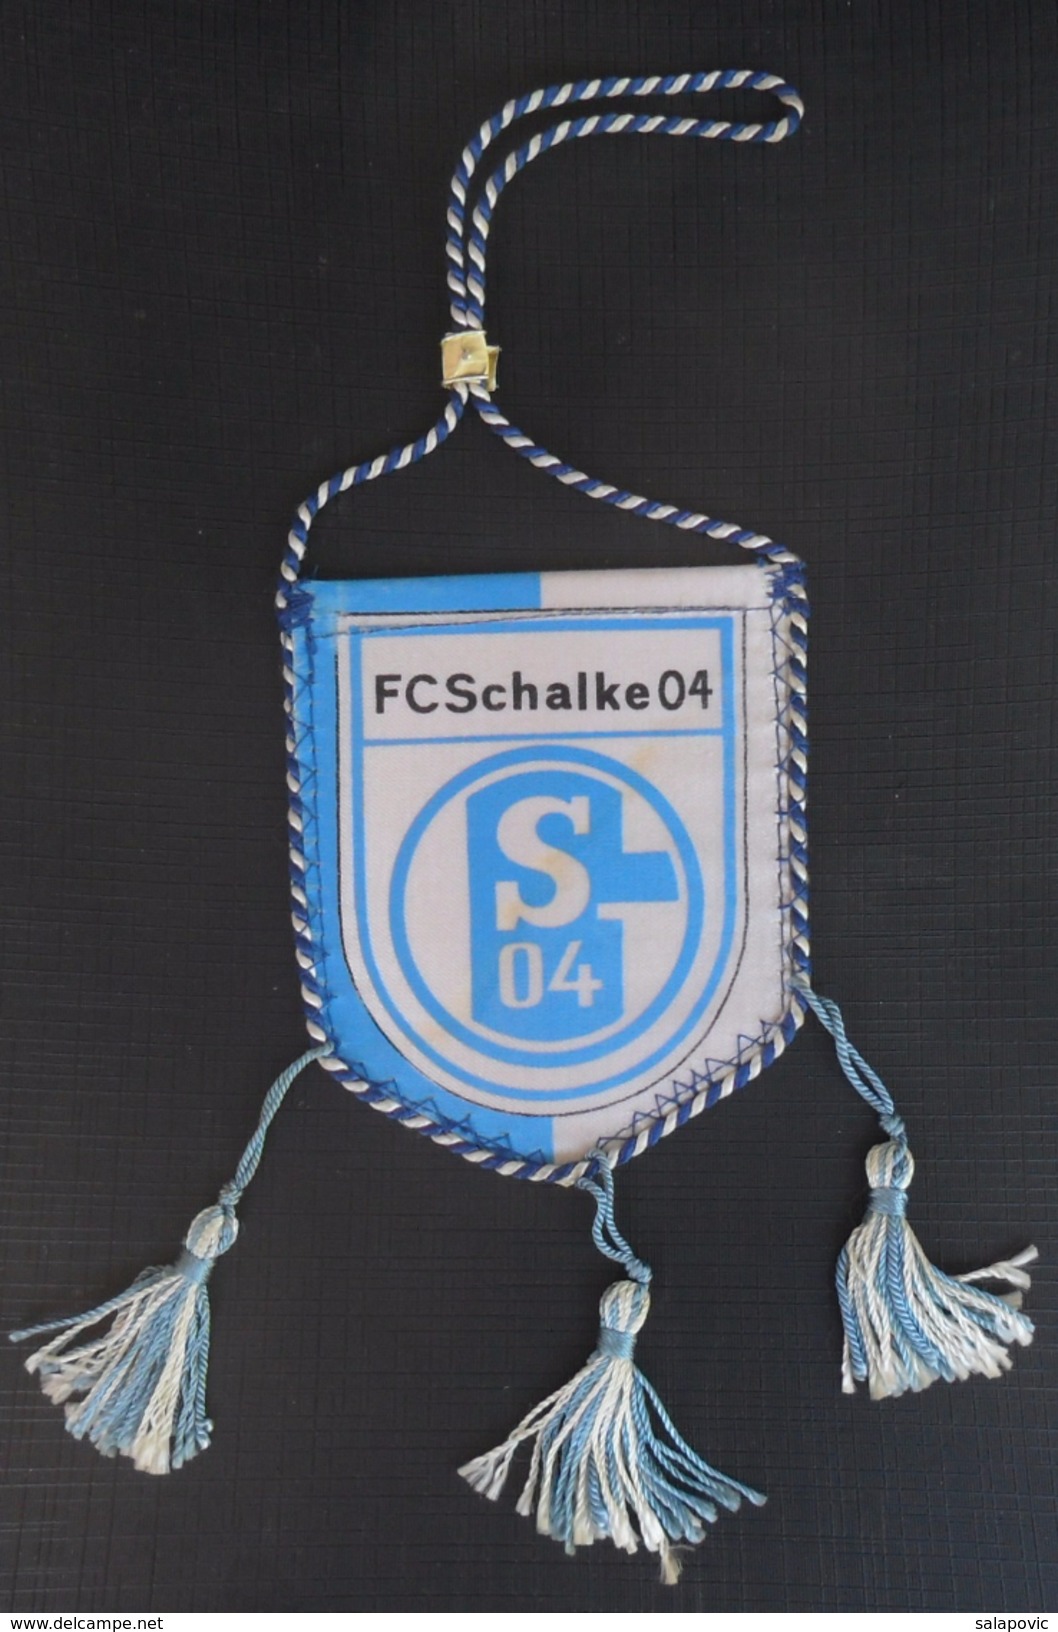 FC Gelsenkirchen-Schalke 04 GERMANY  FOOTBALL CLUB, SOCCER / FUTBOL / CALCIO, OLD PENNANT, SPORTS FLAG - Abbigliamento, Souvenirs & Varie